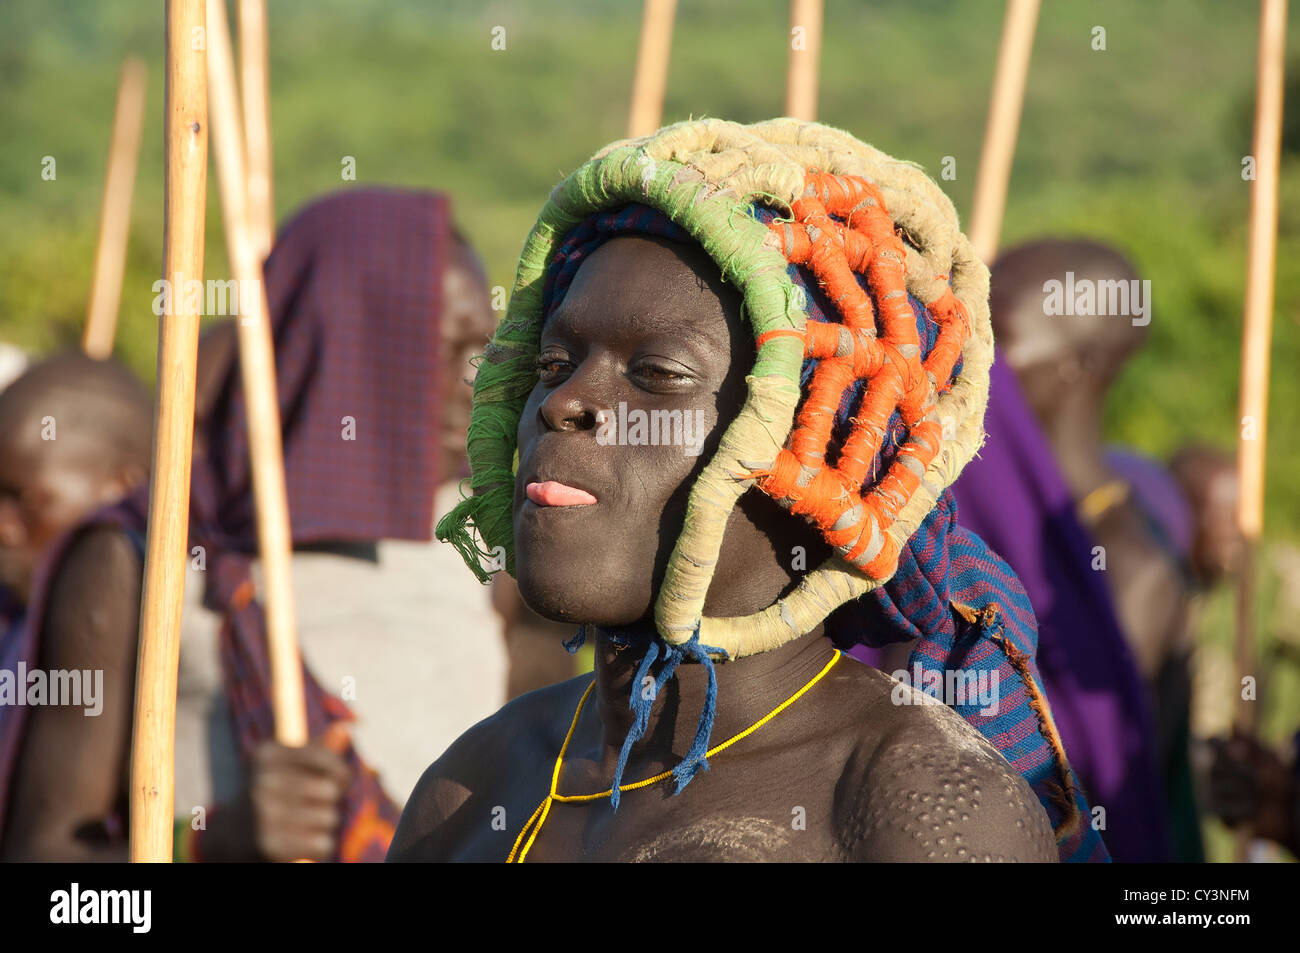 Donga stick fighter, Surma tribe, Tulgit, Omo river valley, Ethiopia Stock Photo